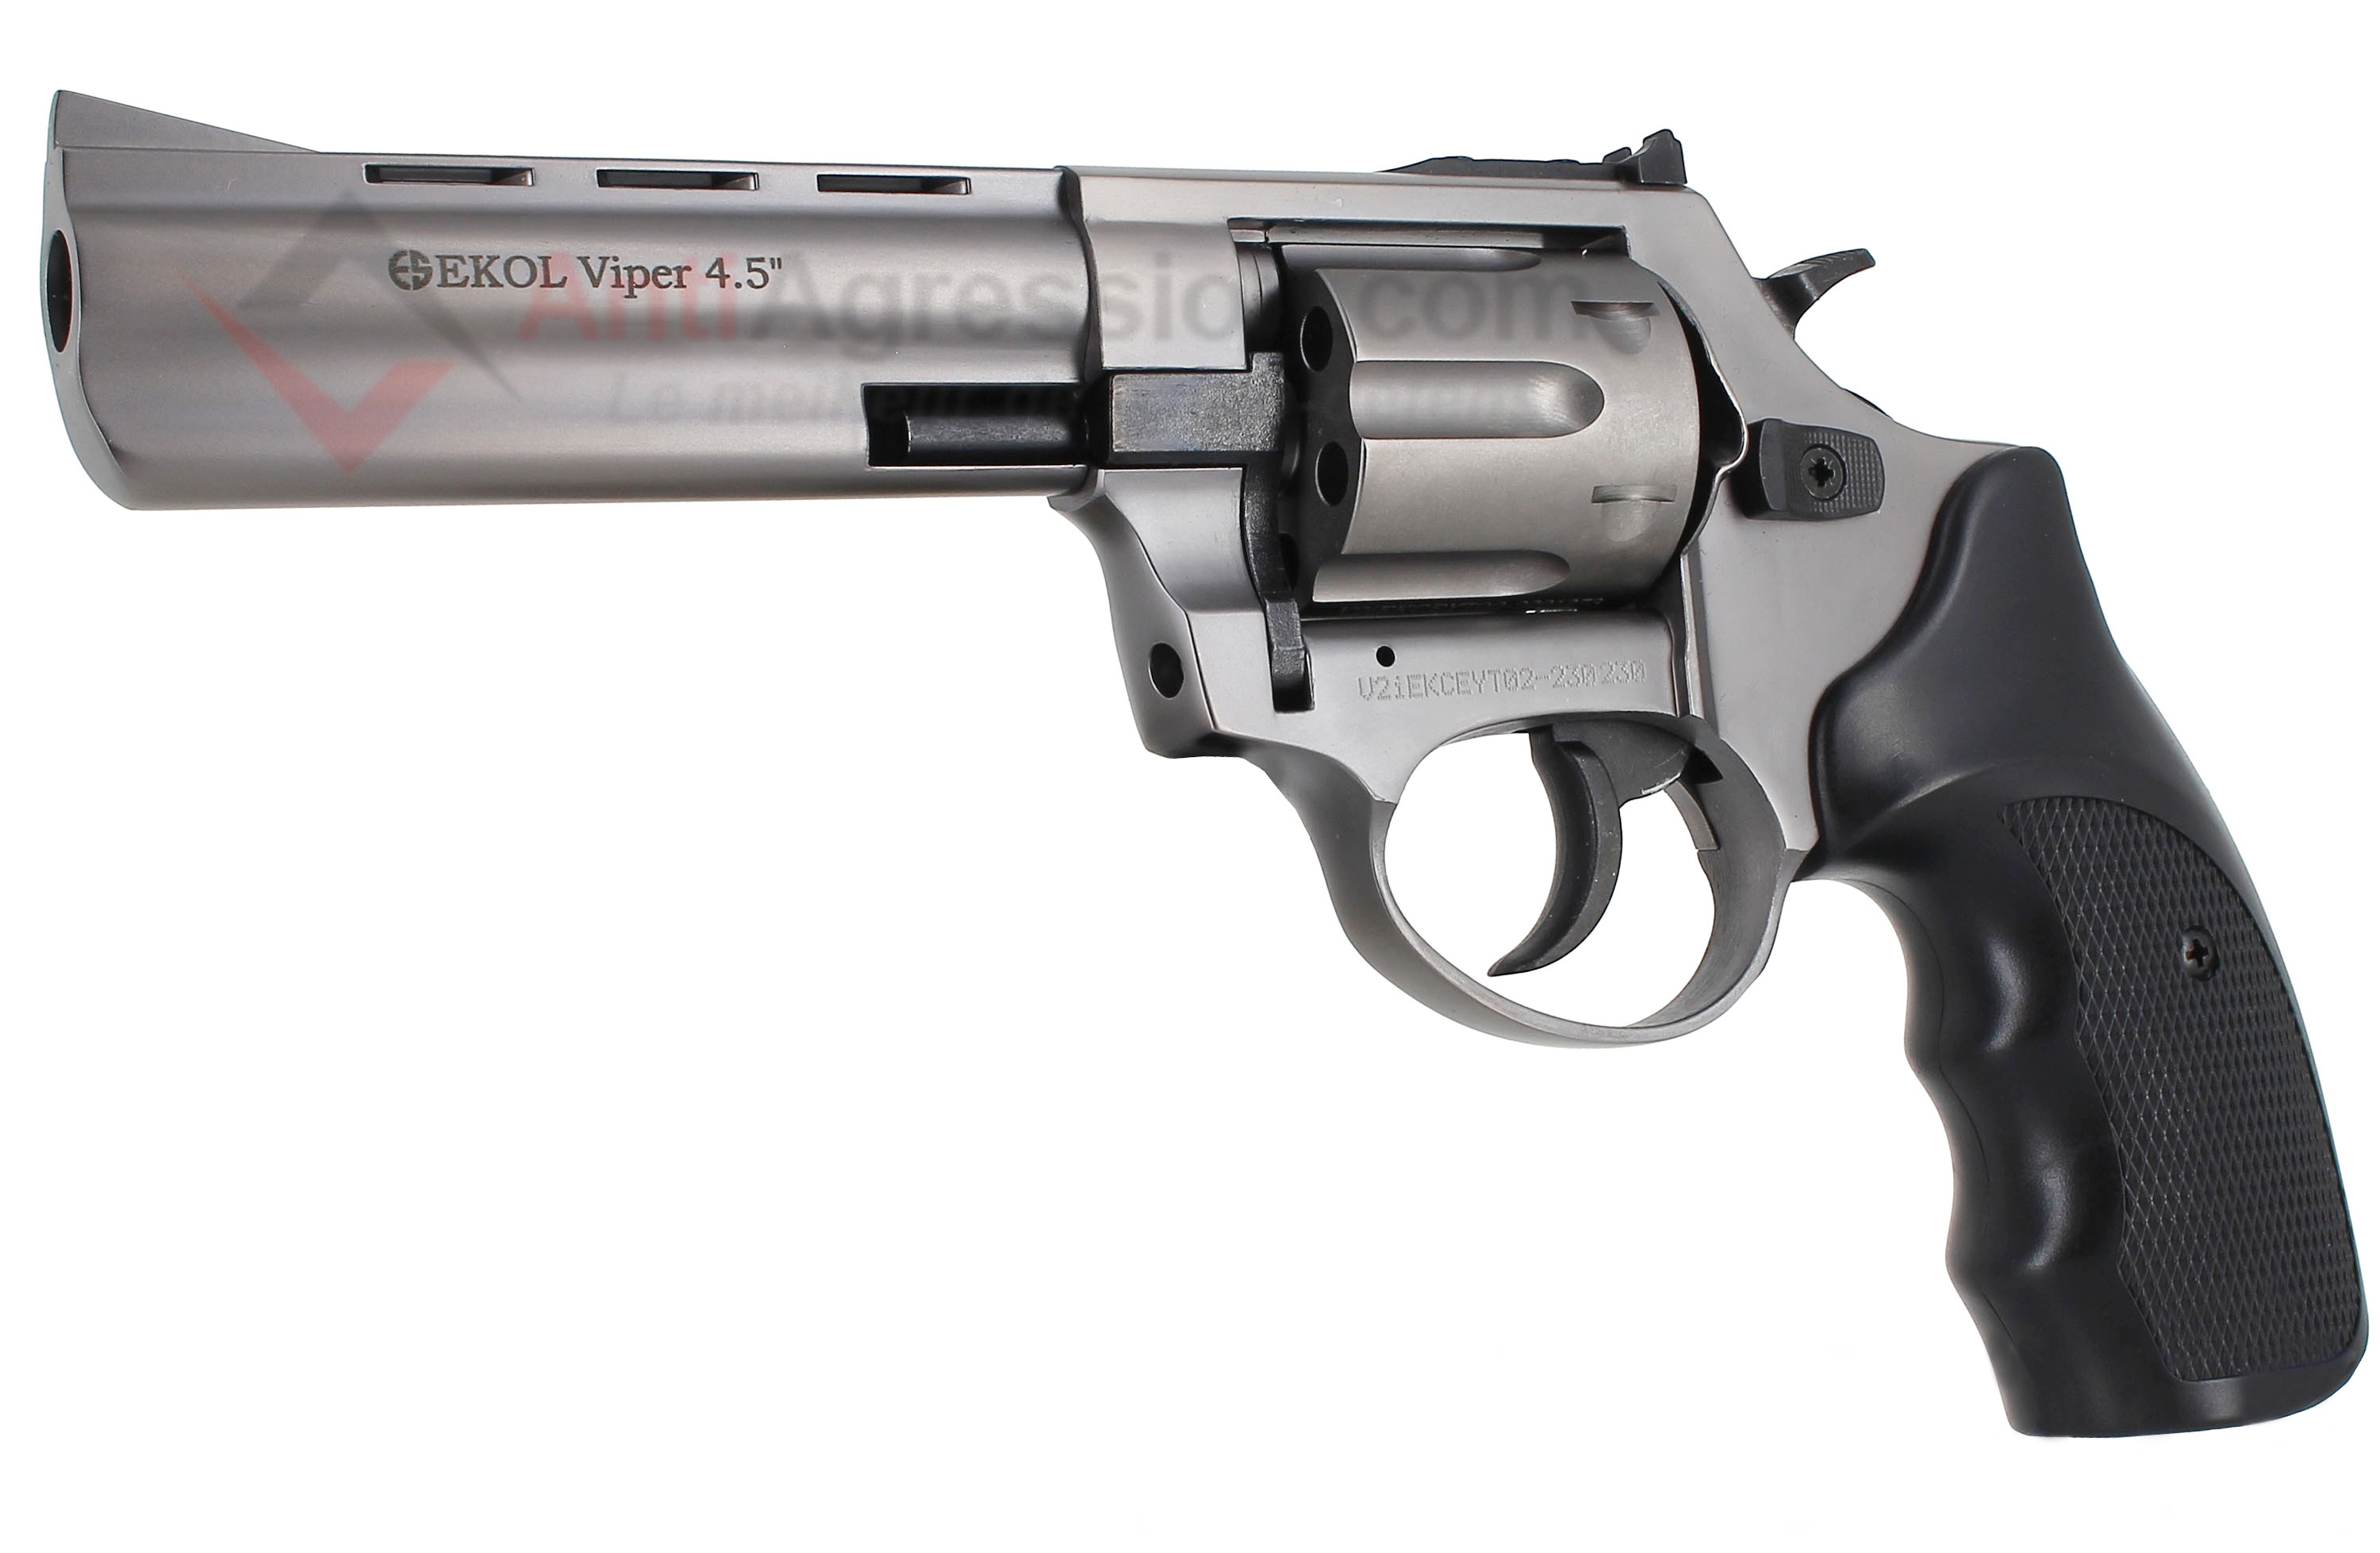 Revolver Ekol VIPER 4.5 inch élégant et robuste